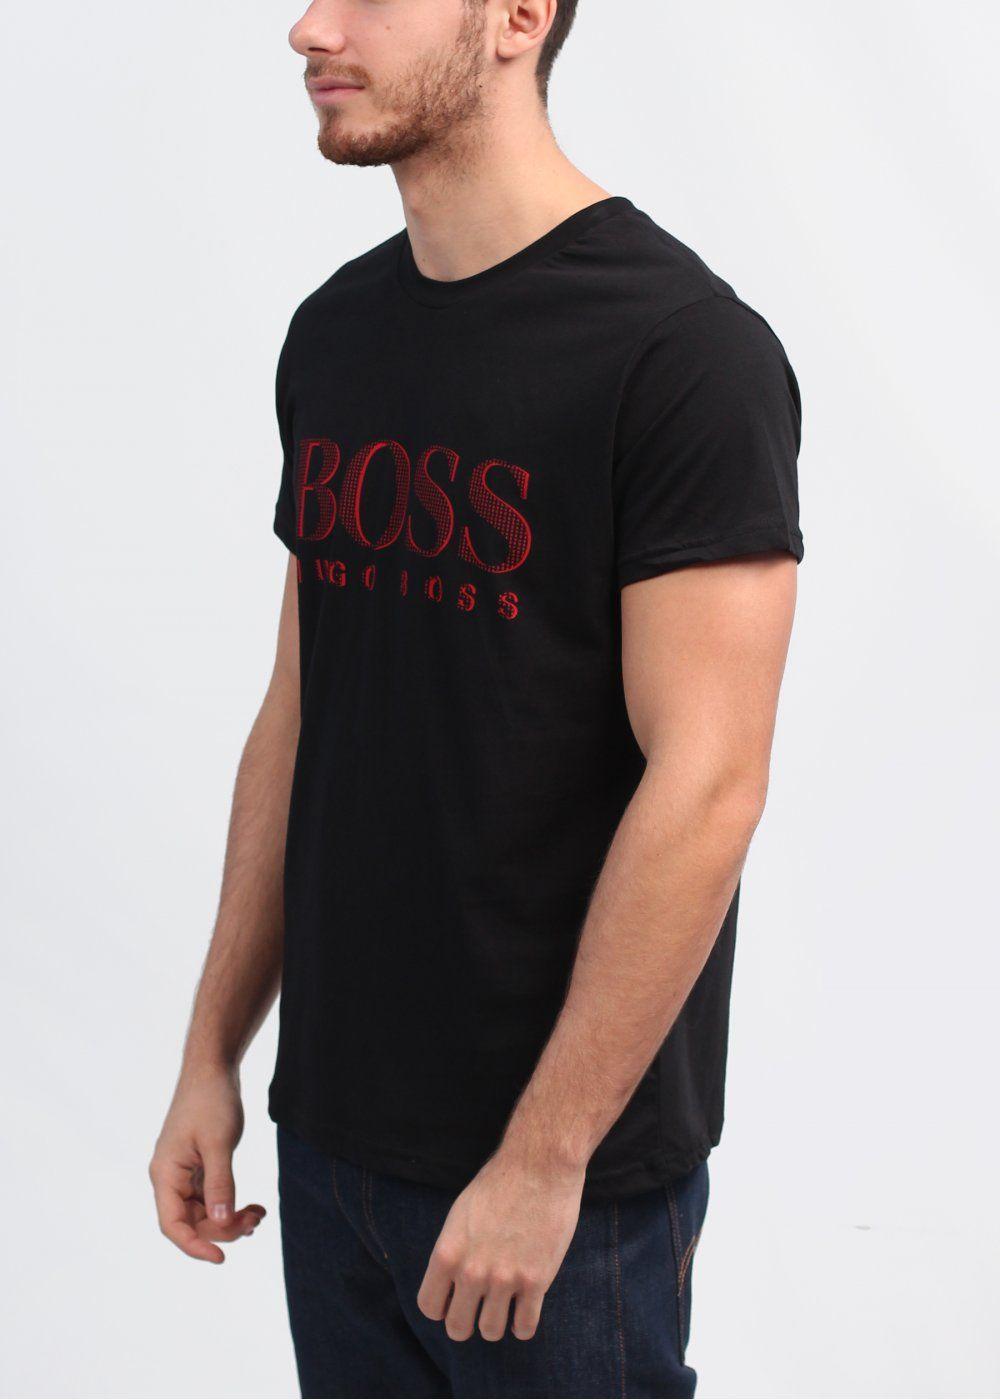 Black and Red T Logo - Hugo Boss Black Logo T-Shirt - Black / Red